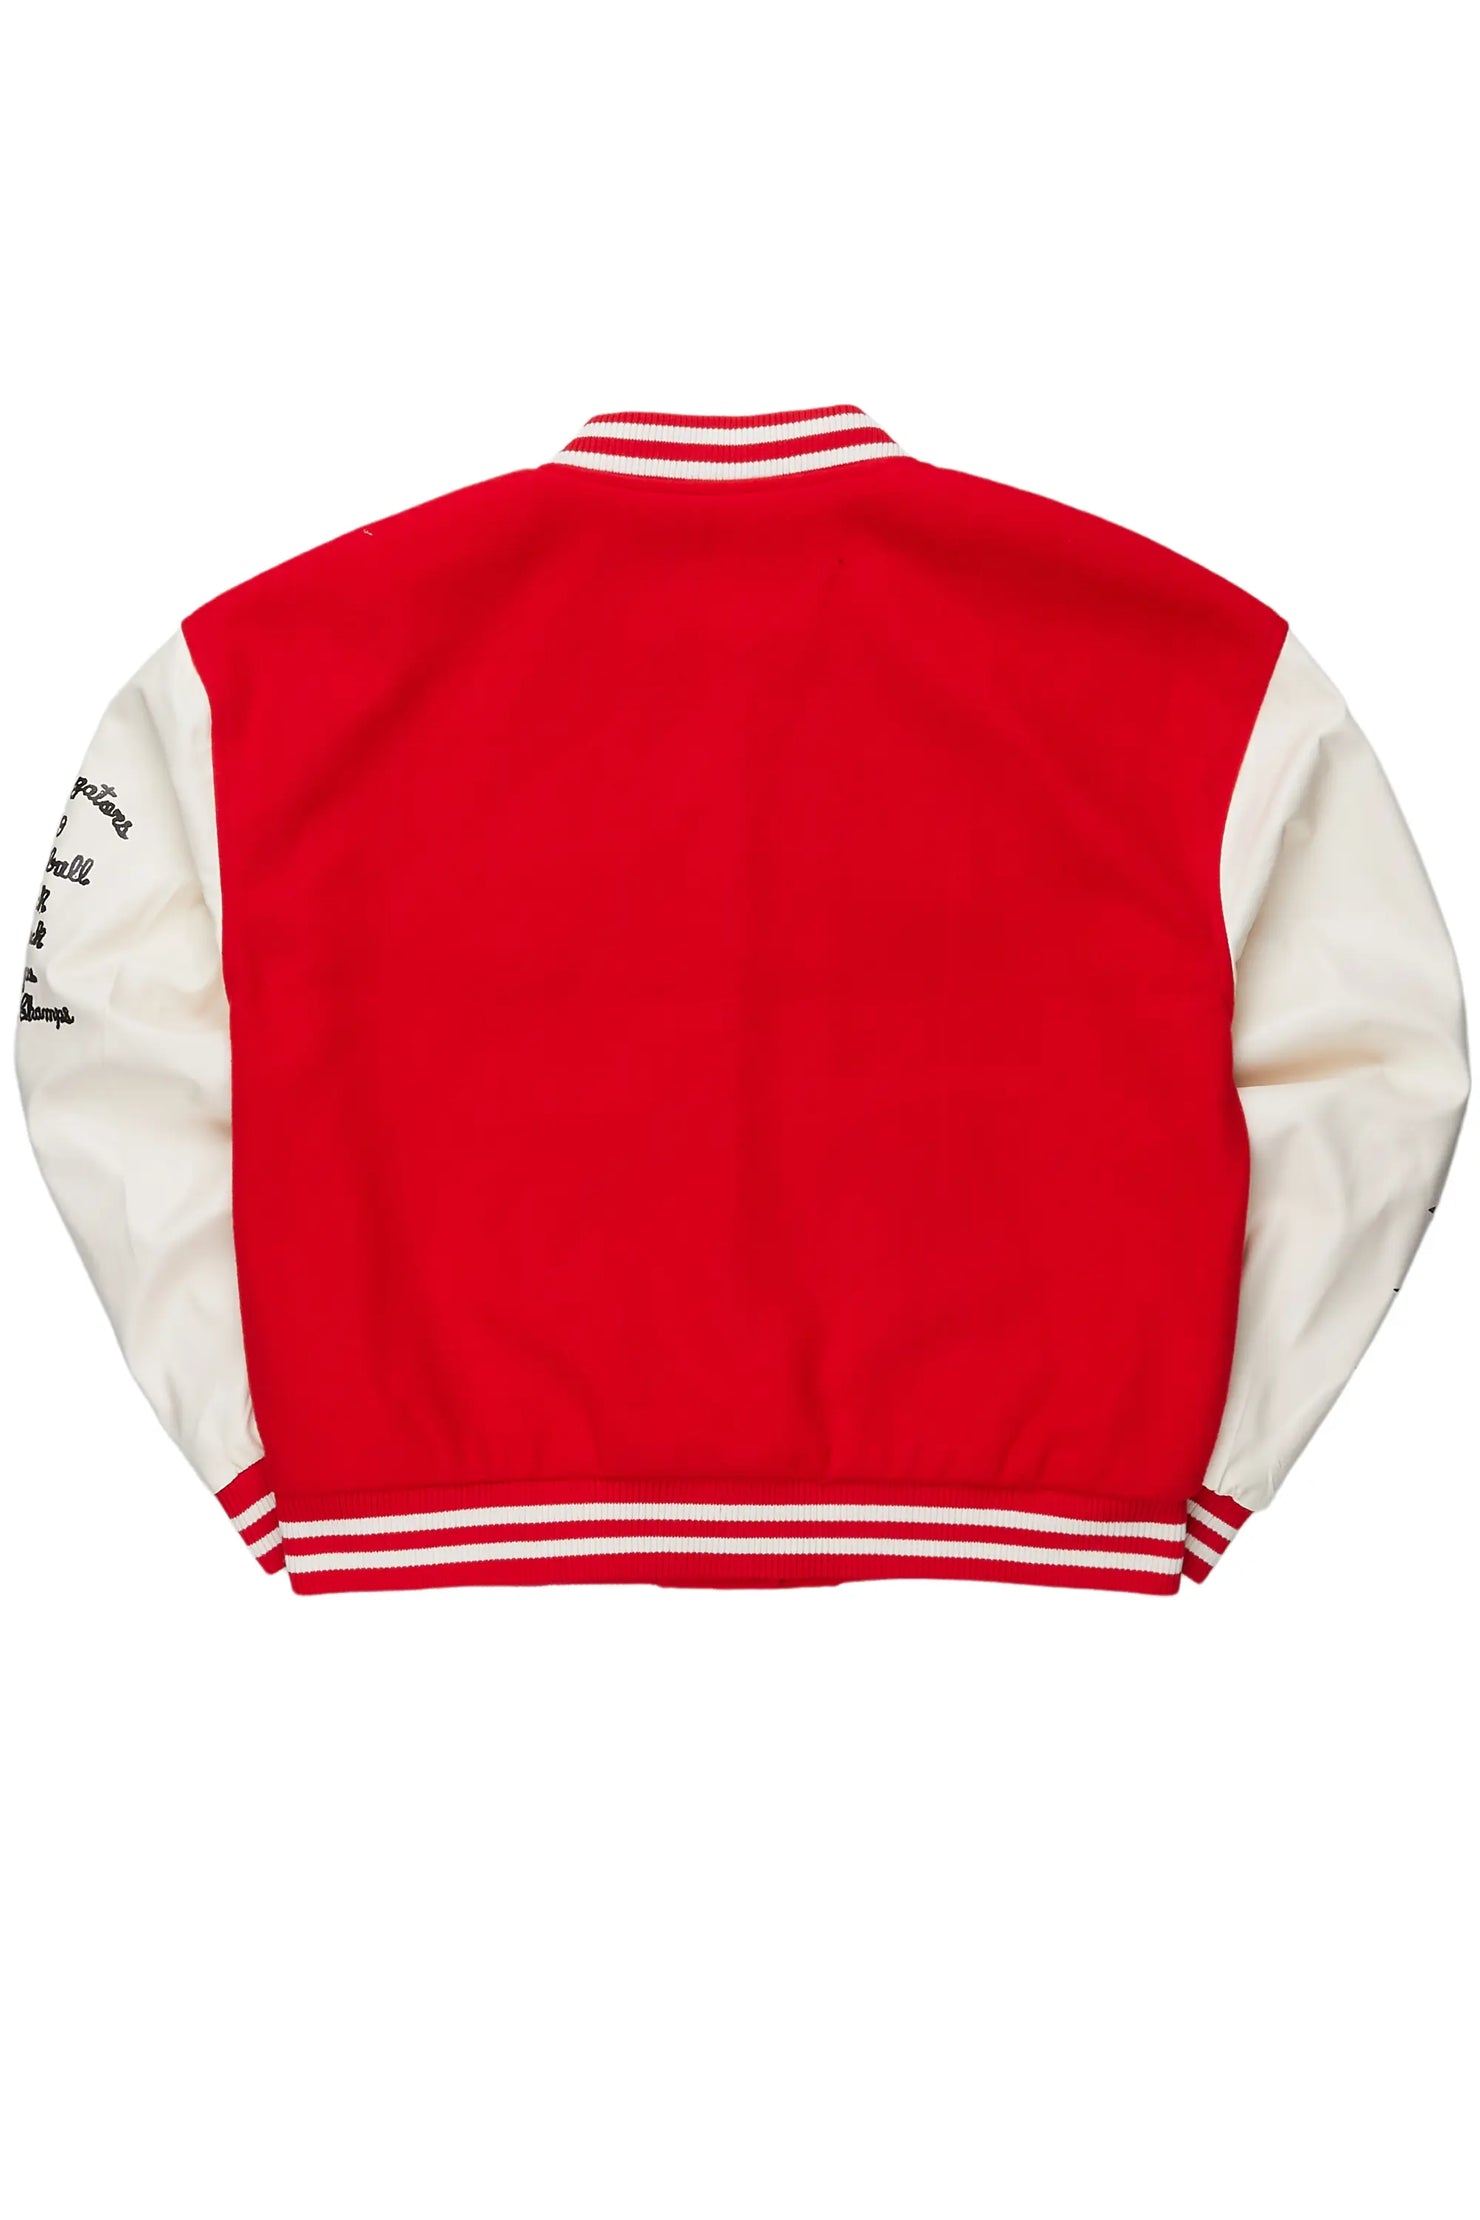 Cori Red Varsity Jacket